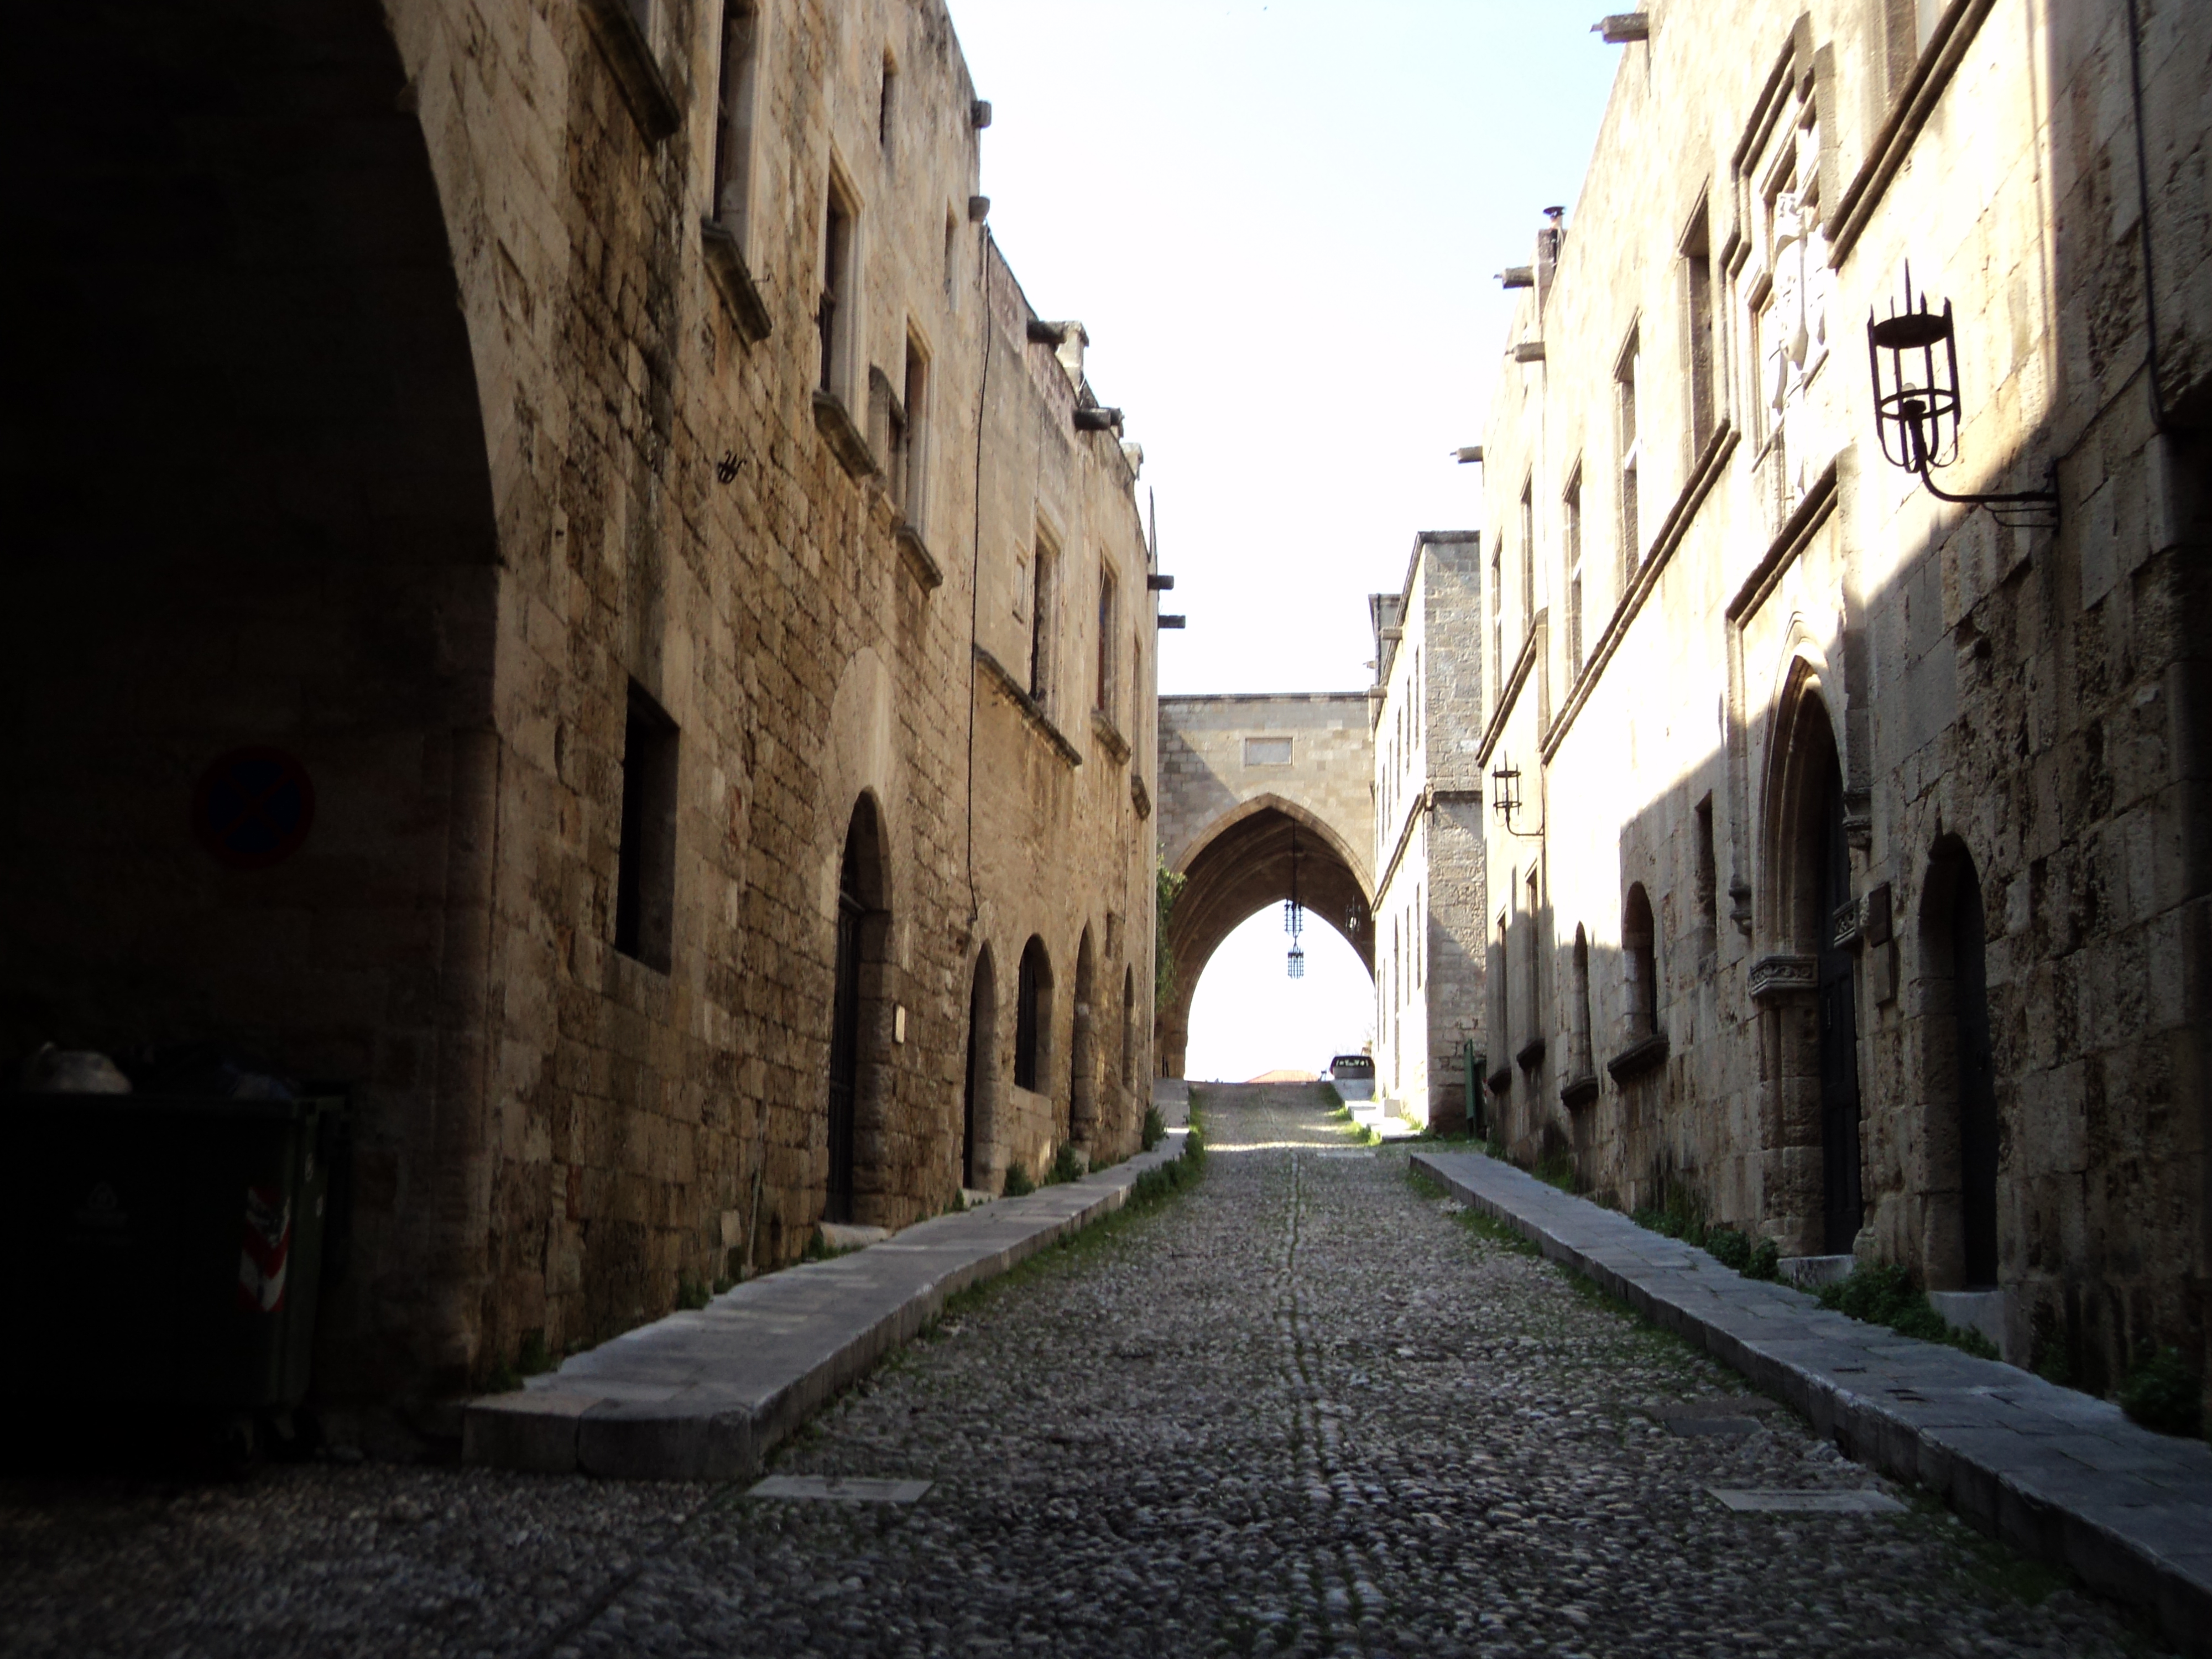 File:Knights street, old city, Rhodes, Greece.jpg - Wikimedia Commons